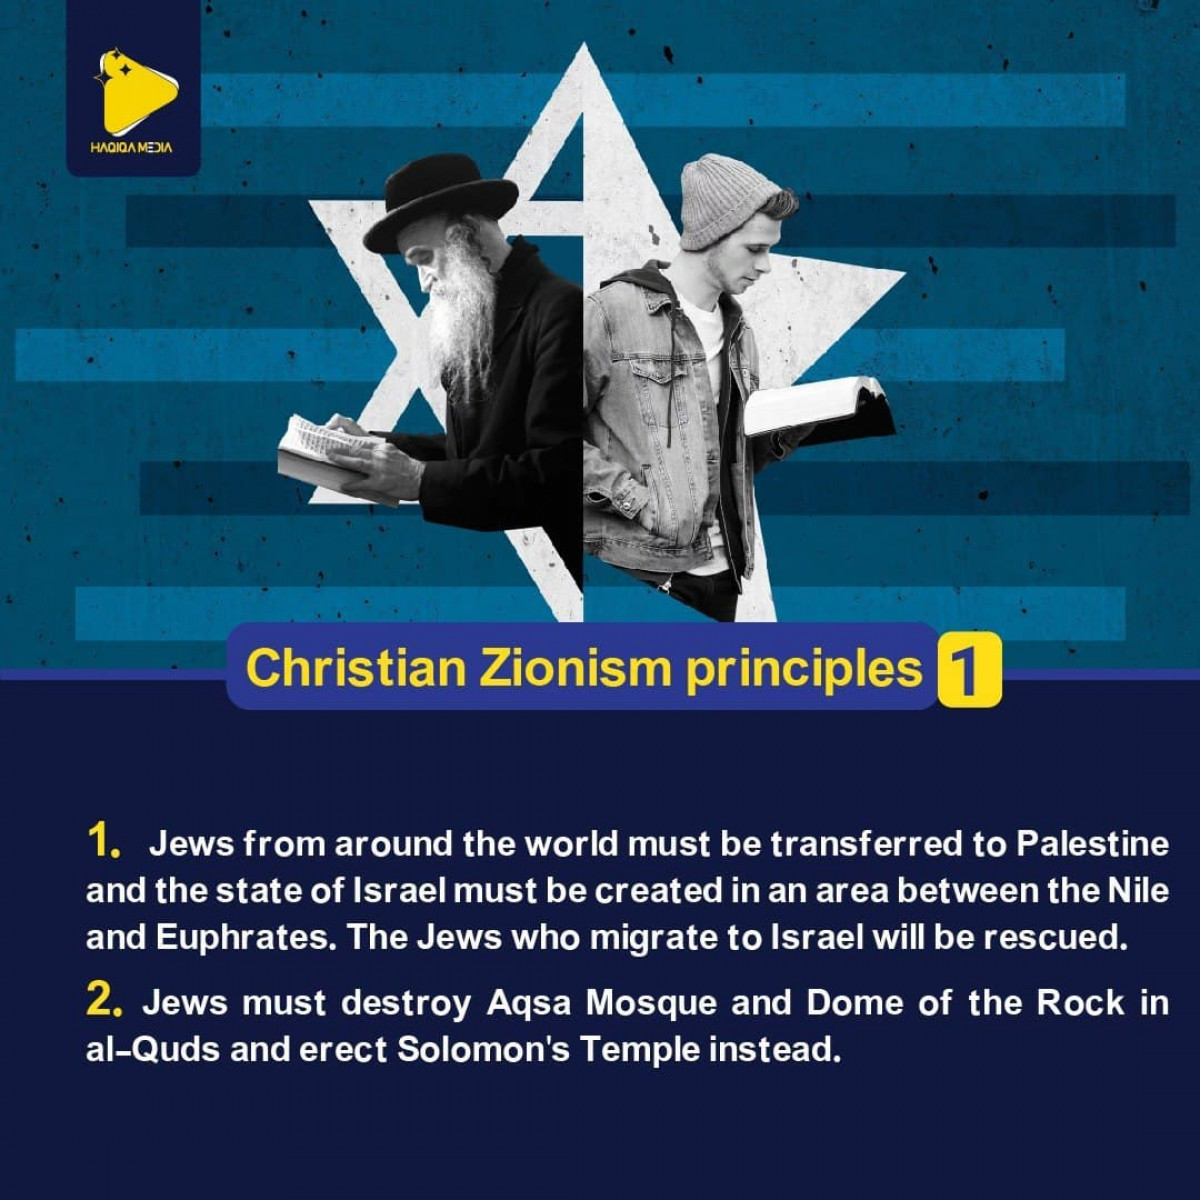 Christian Zionism principles 1